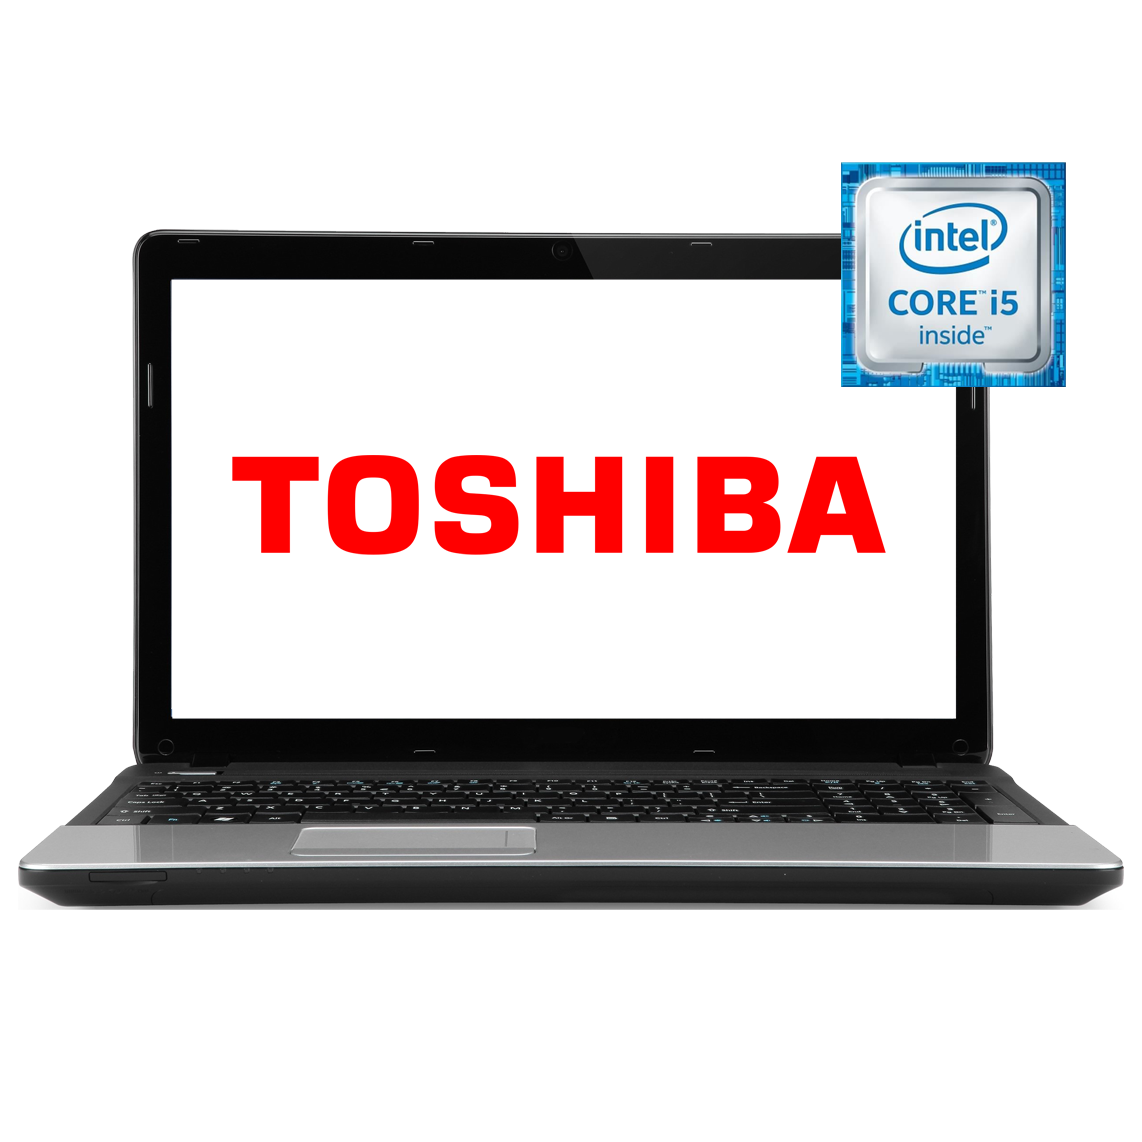 Toshiba - 13 inch Core i5 2nd Gen